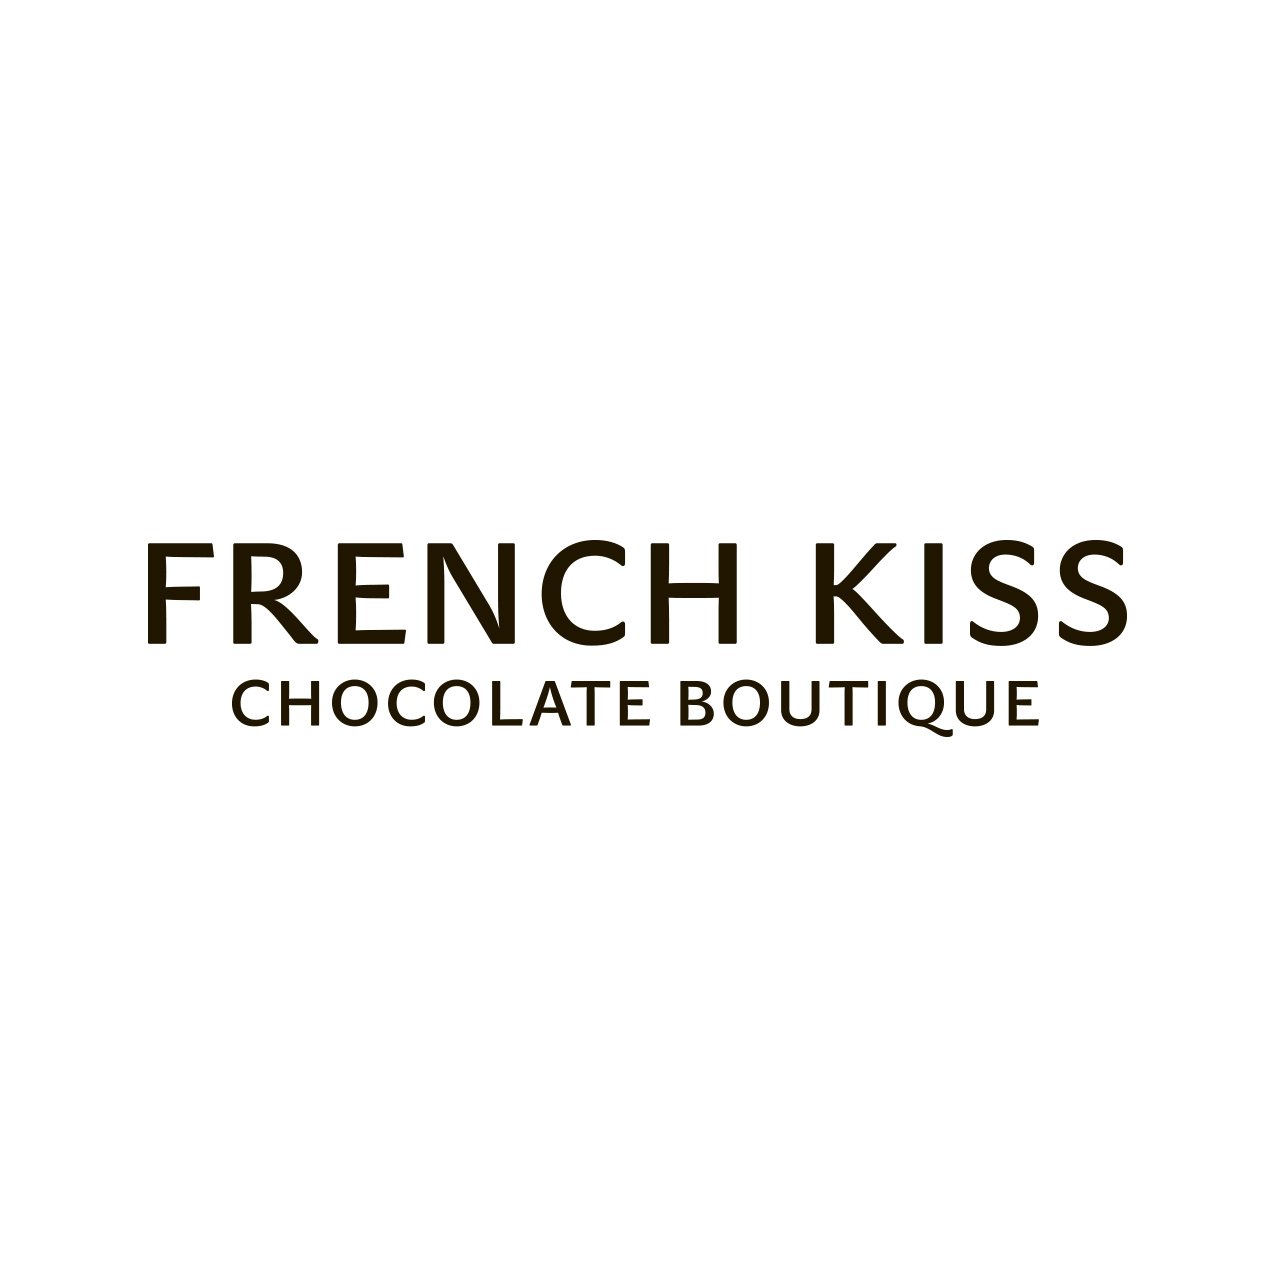 French kiss шоколадный. French Kiss логотип. Френч Кисс Владивосток. French Kiss Chocolate Boutique. French Kiss шоколад логотип.